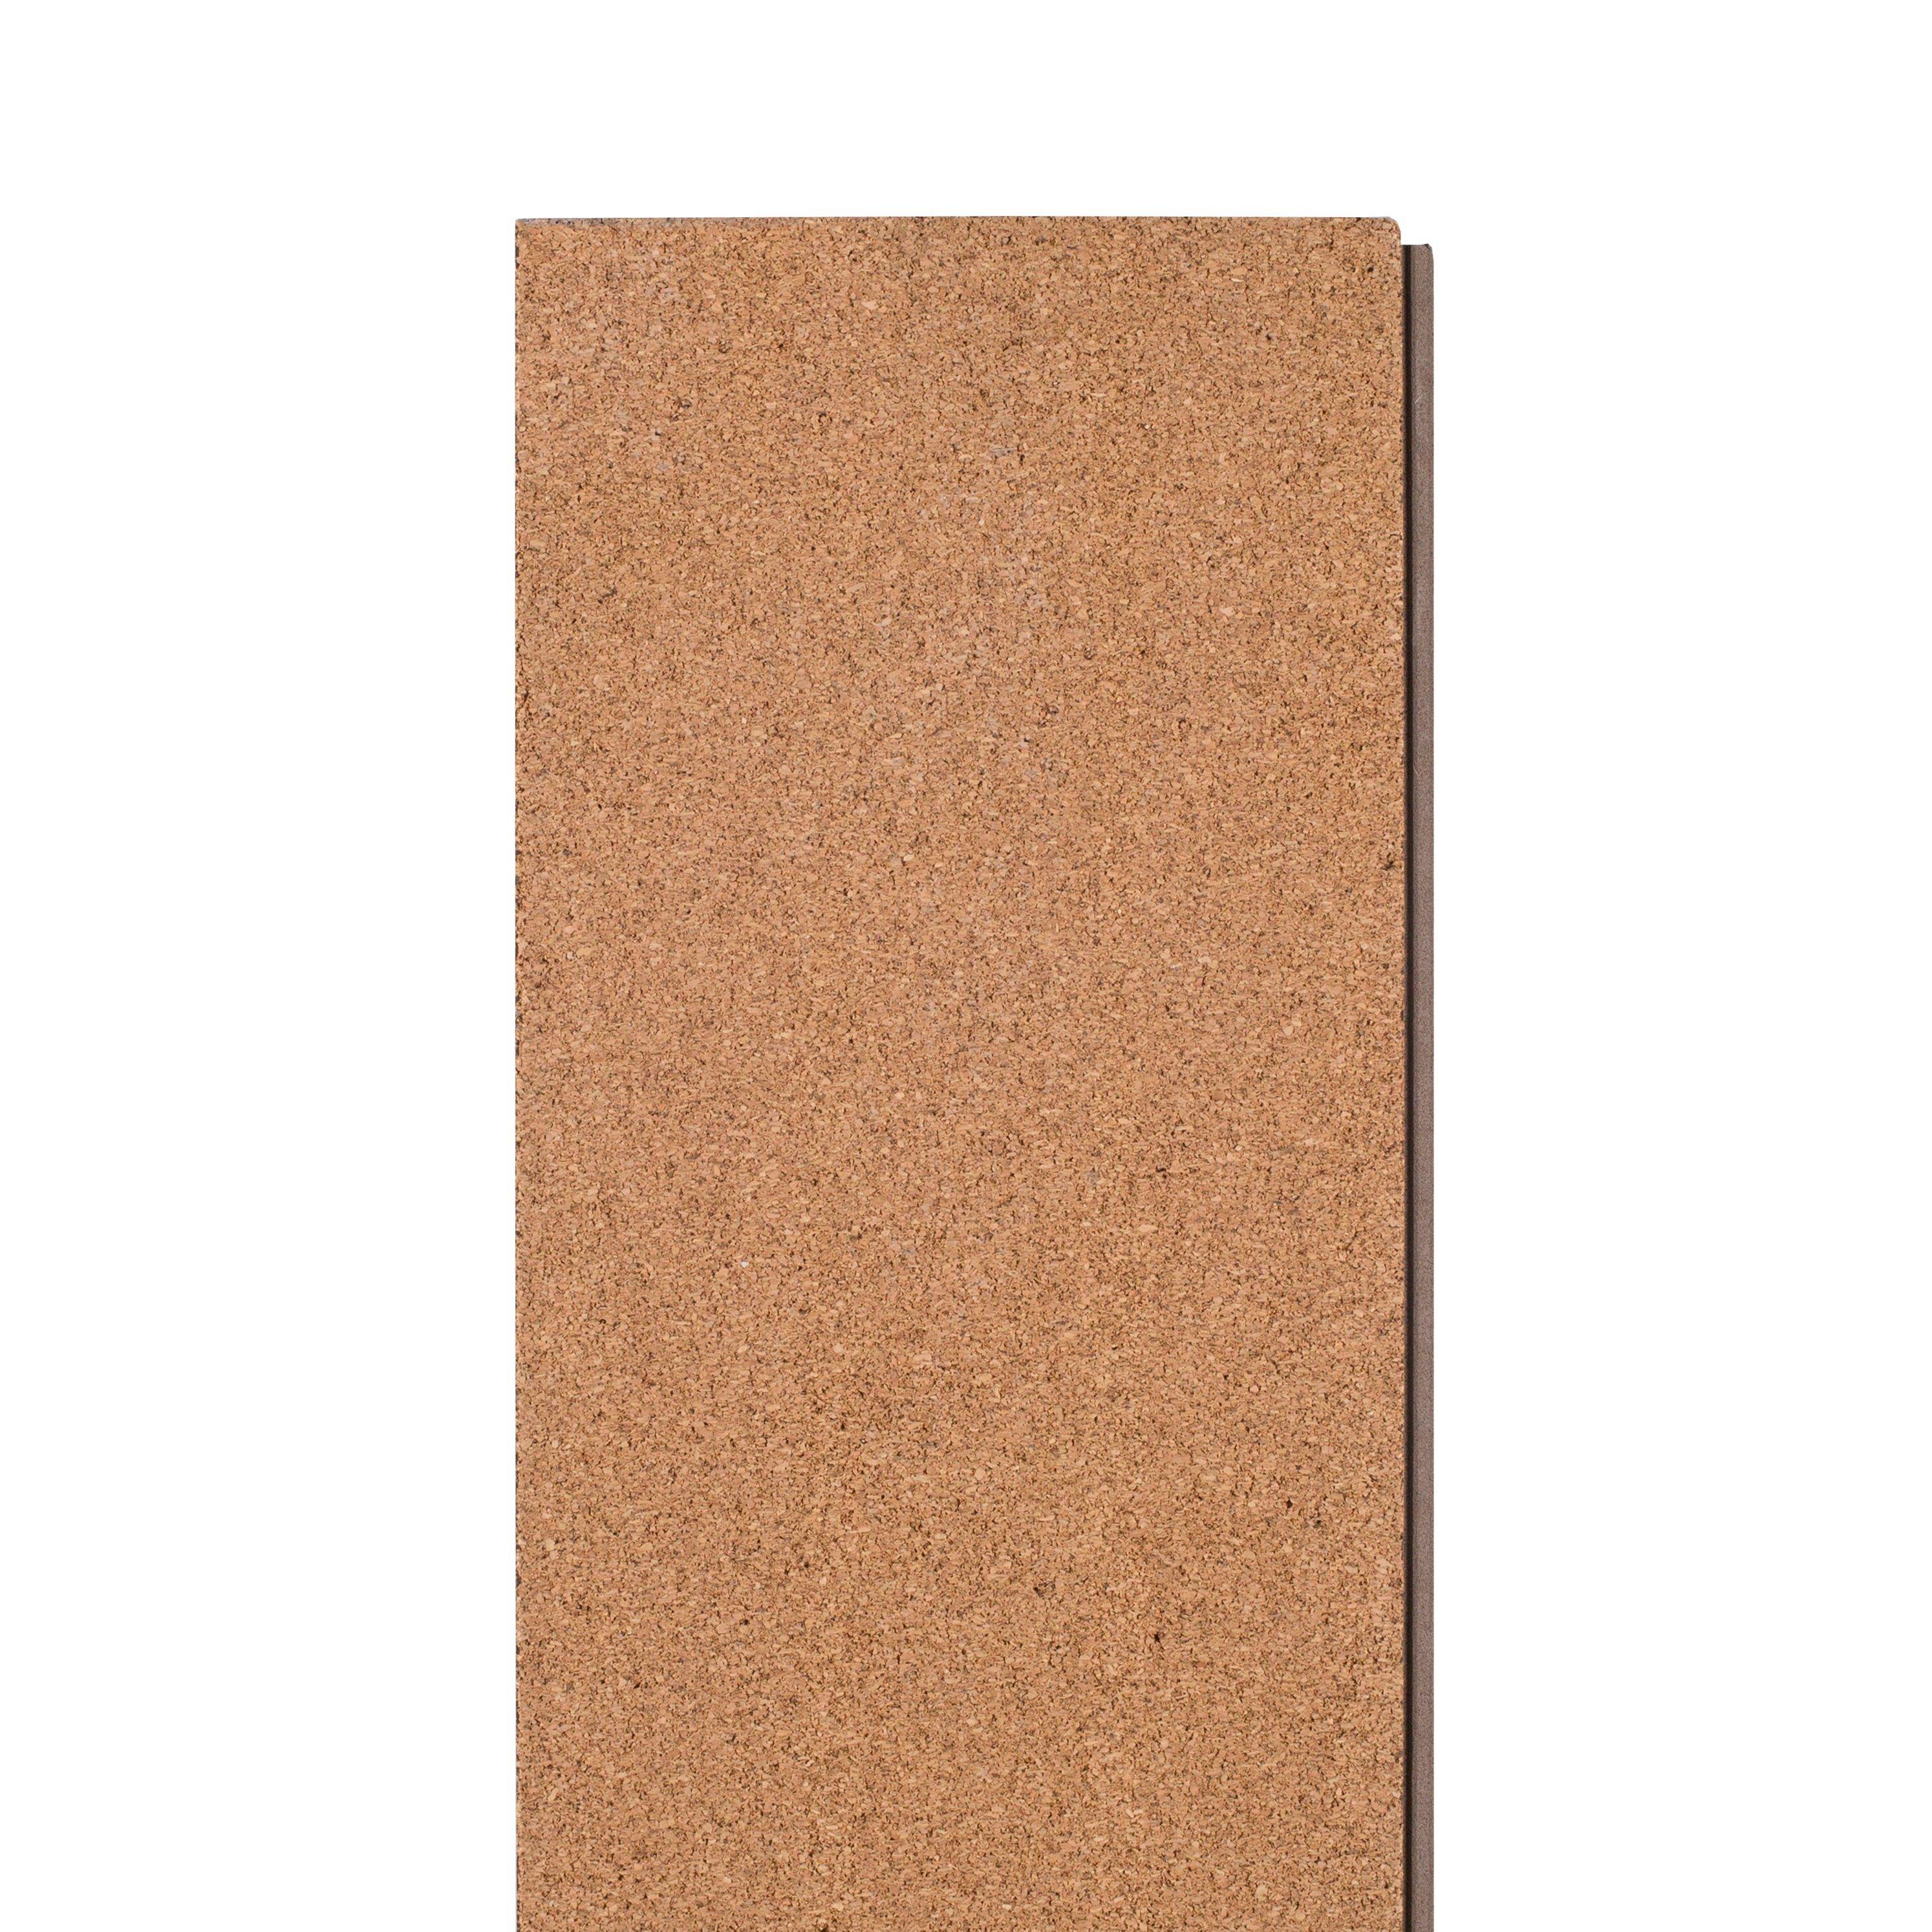 Golden Pierce Rigid Core Luxury Vinyl Plank - Cork Back